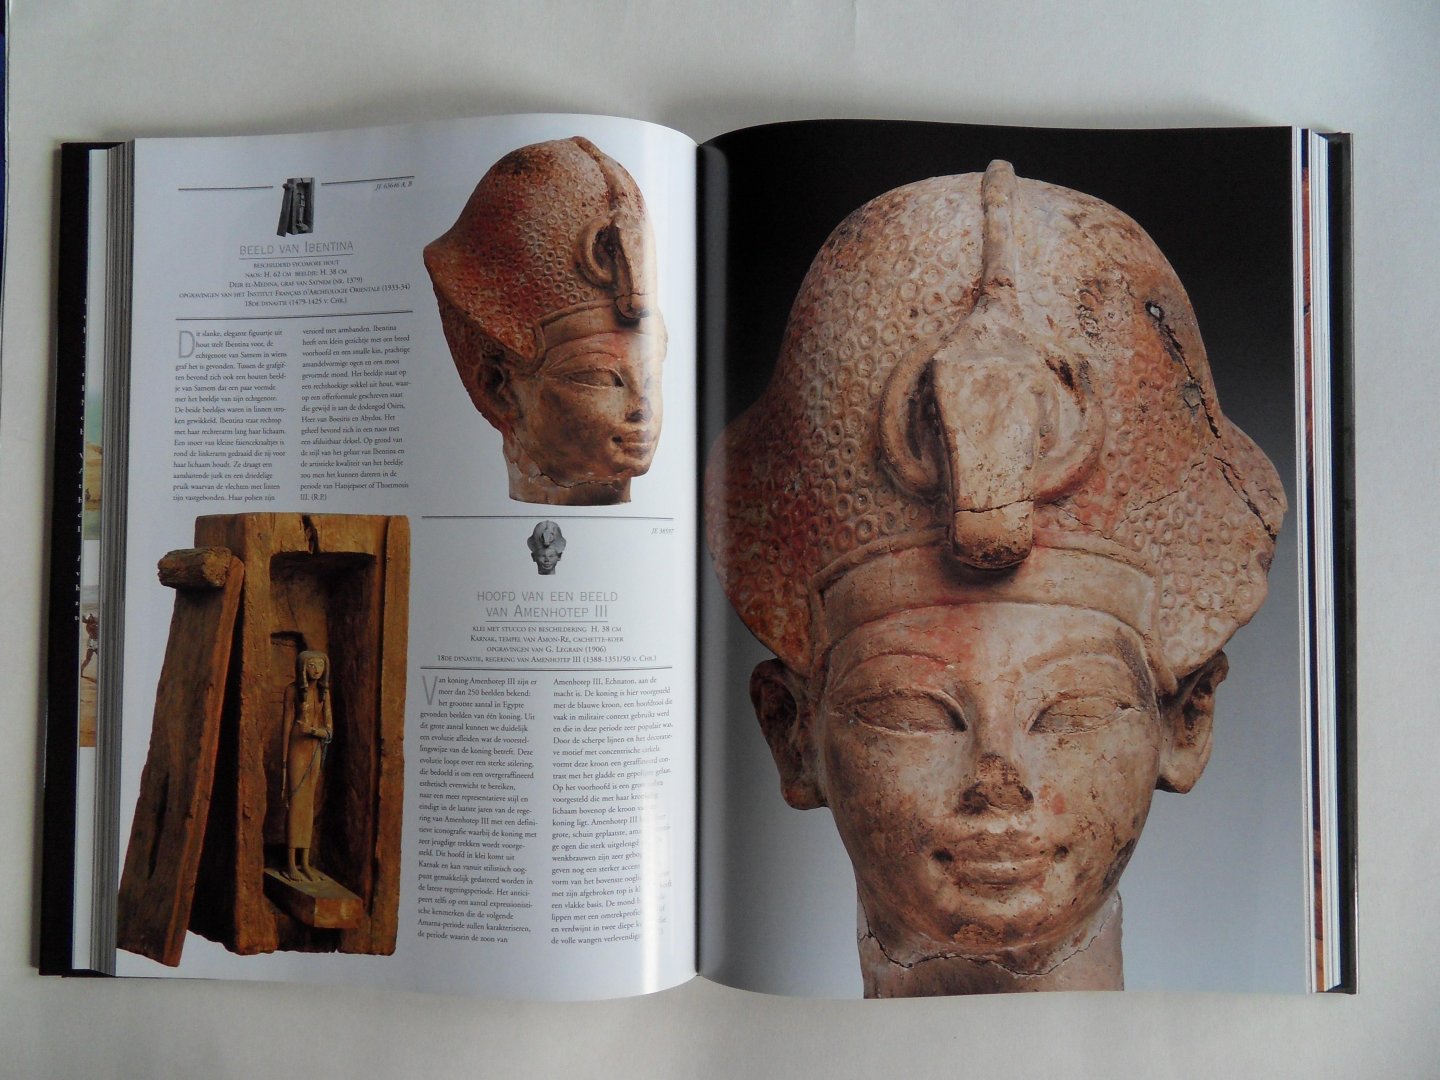 Tiradritti, Francesco (tekst); Luca, Araldo de (fotografie). - Kunstschatten uit Egypte.